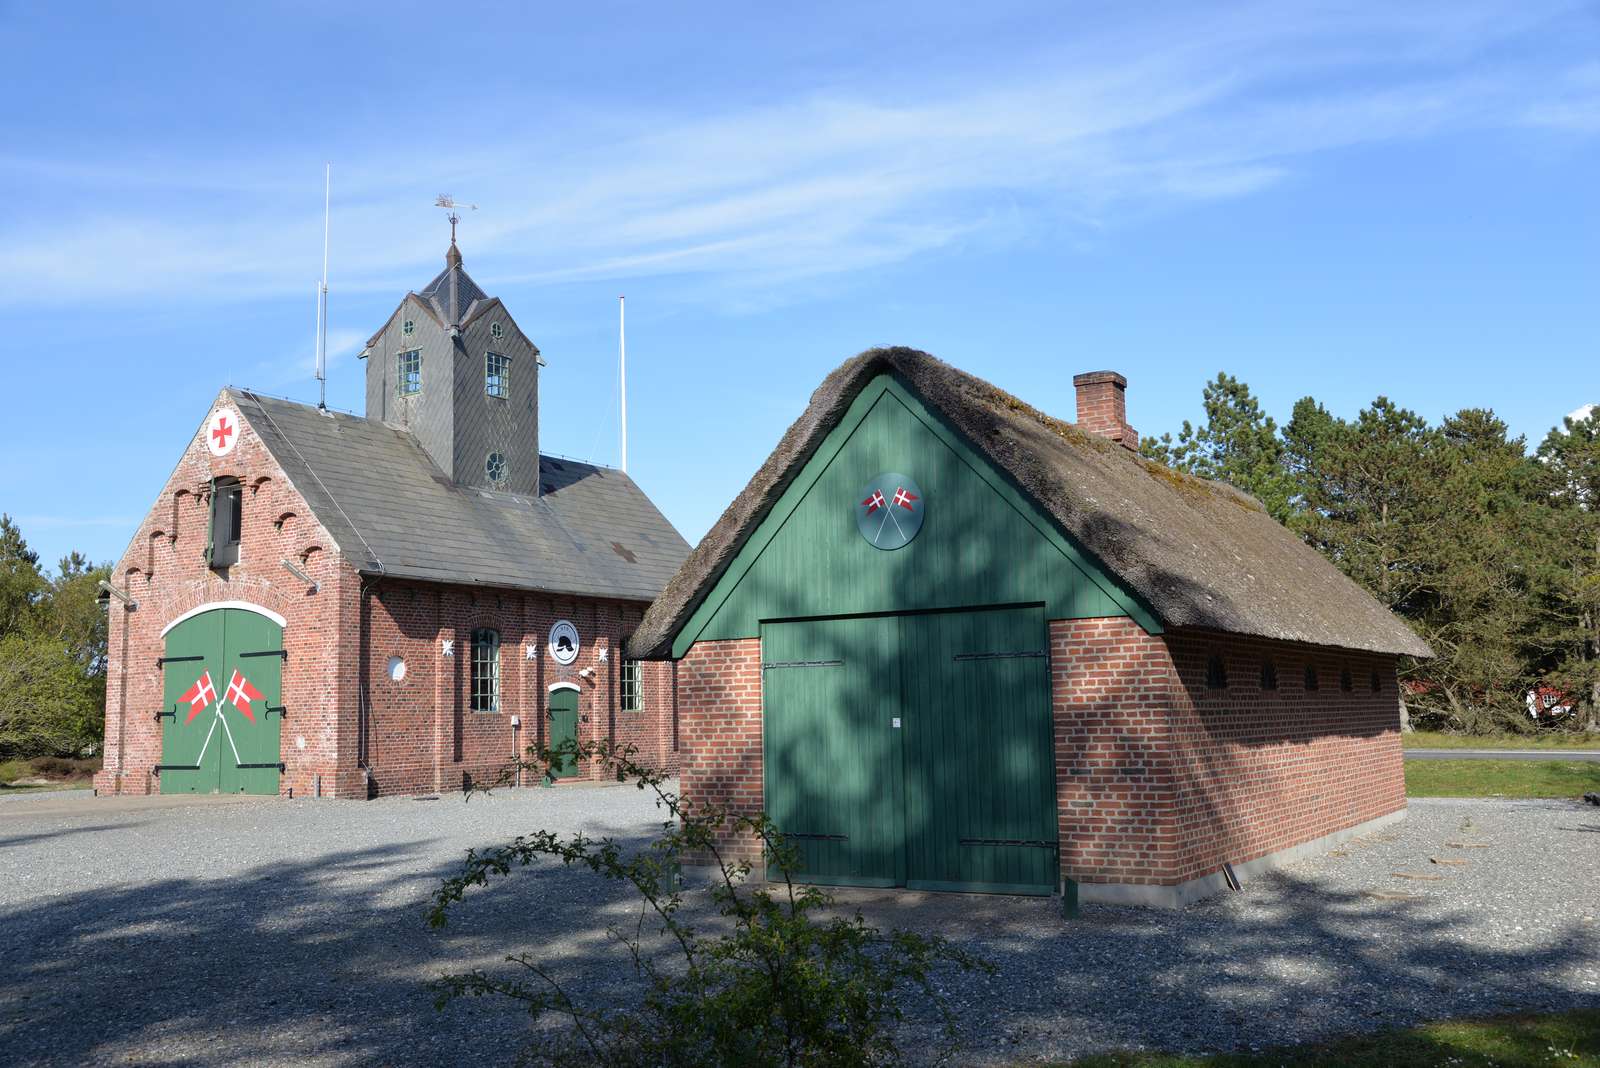 Rømø fire station